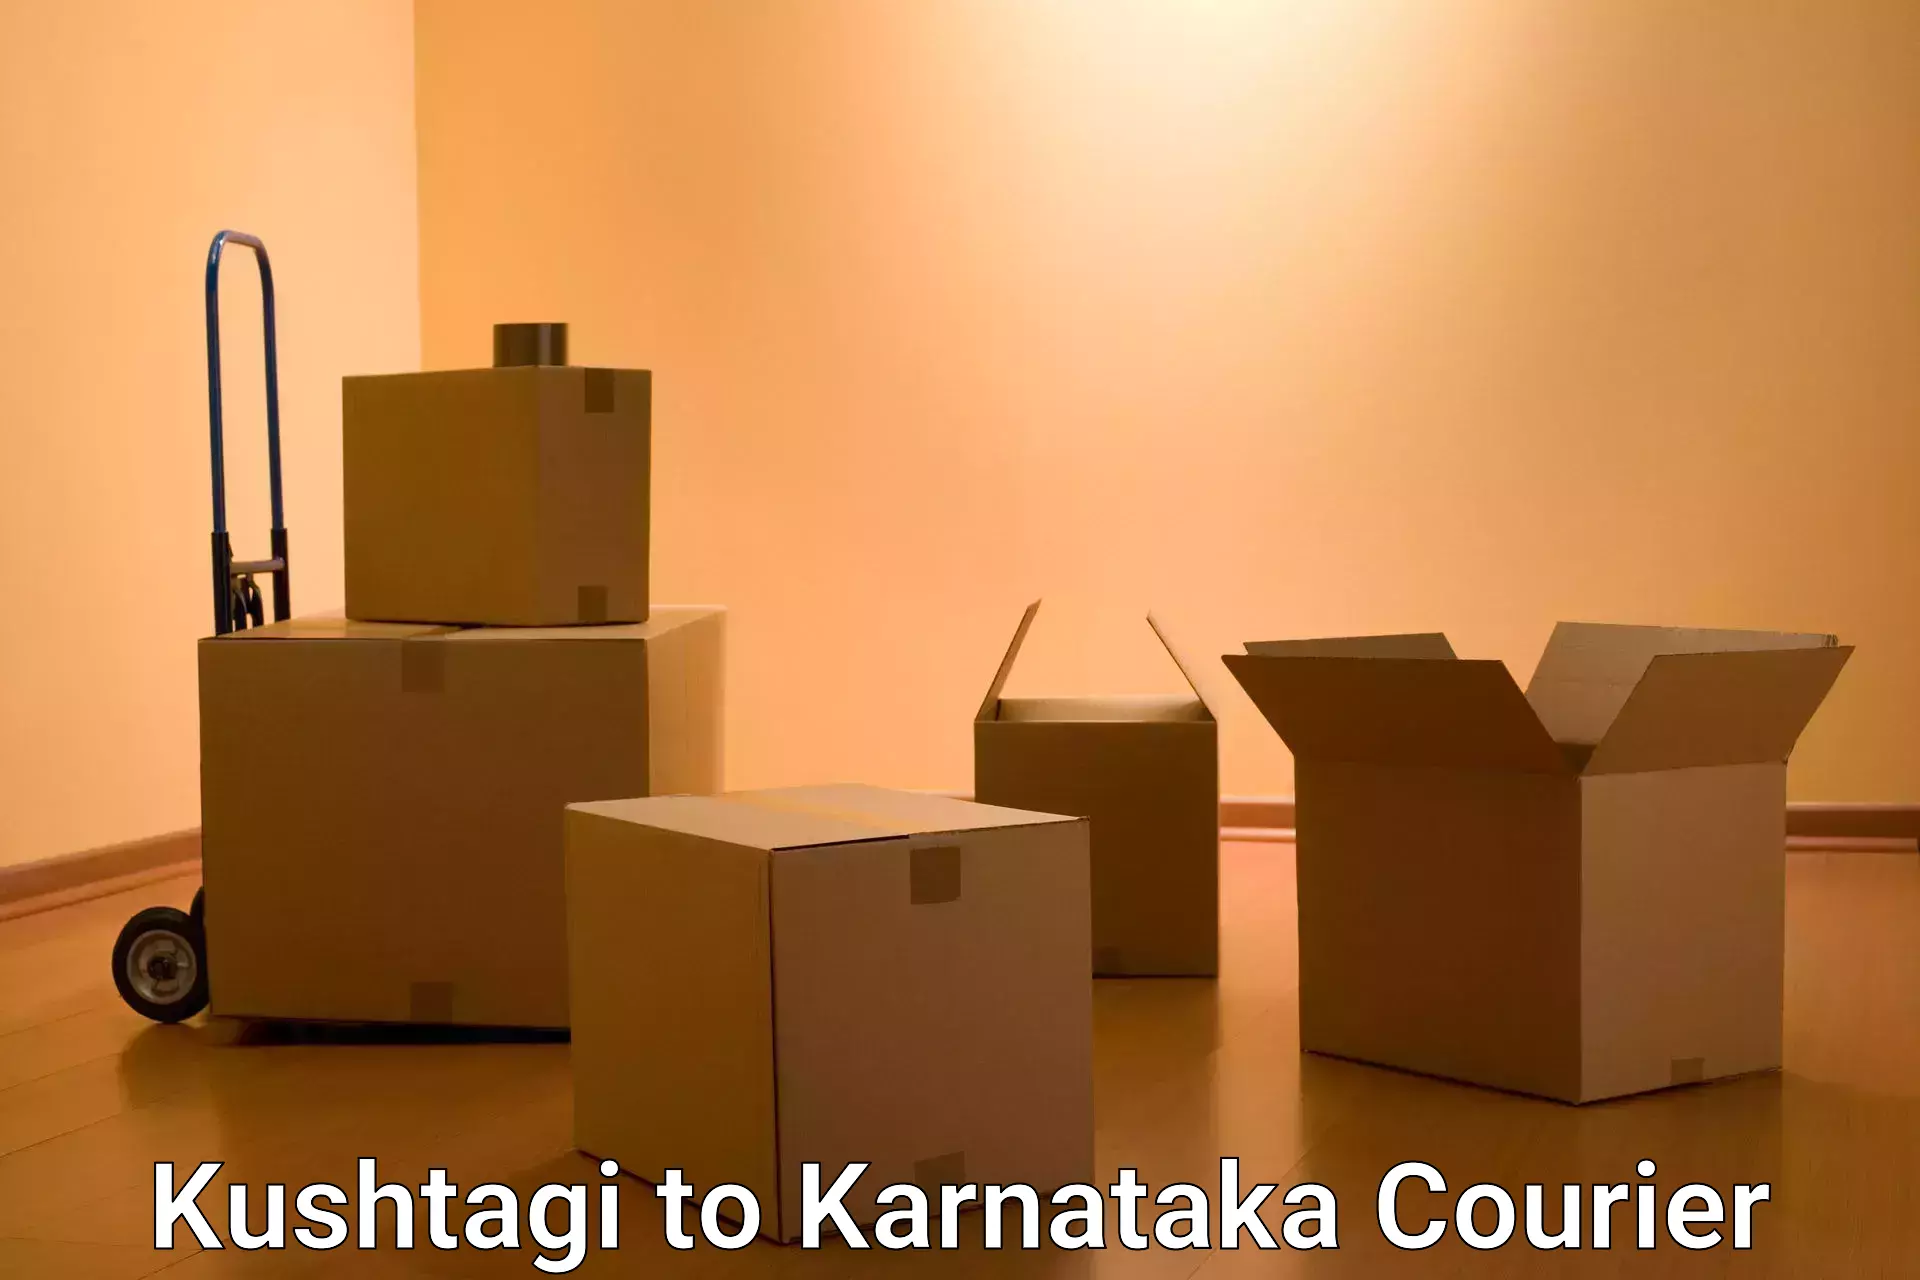 Package delivery network Kushtagi to Karnataka